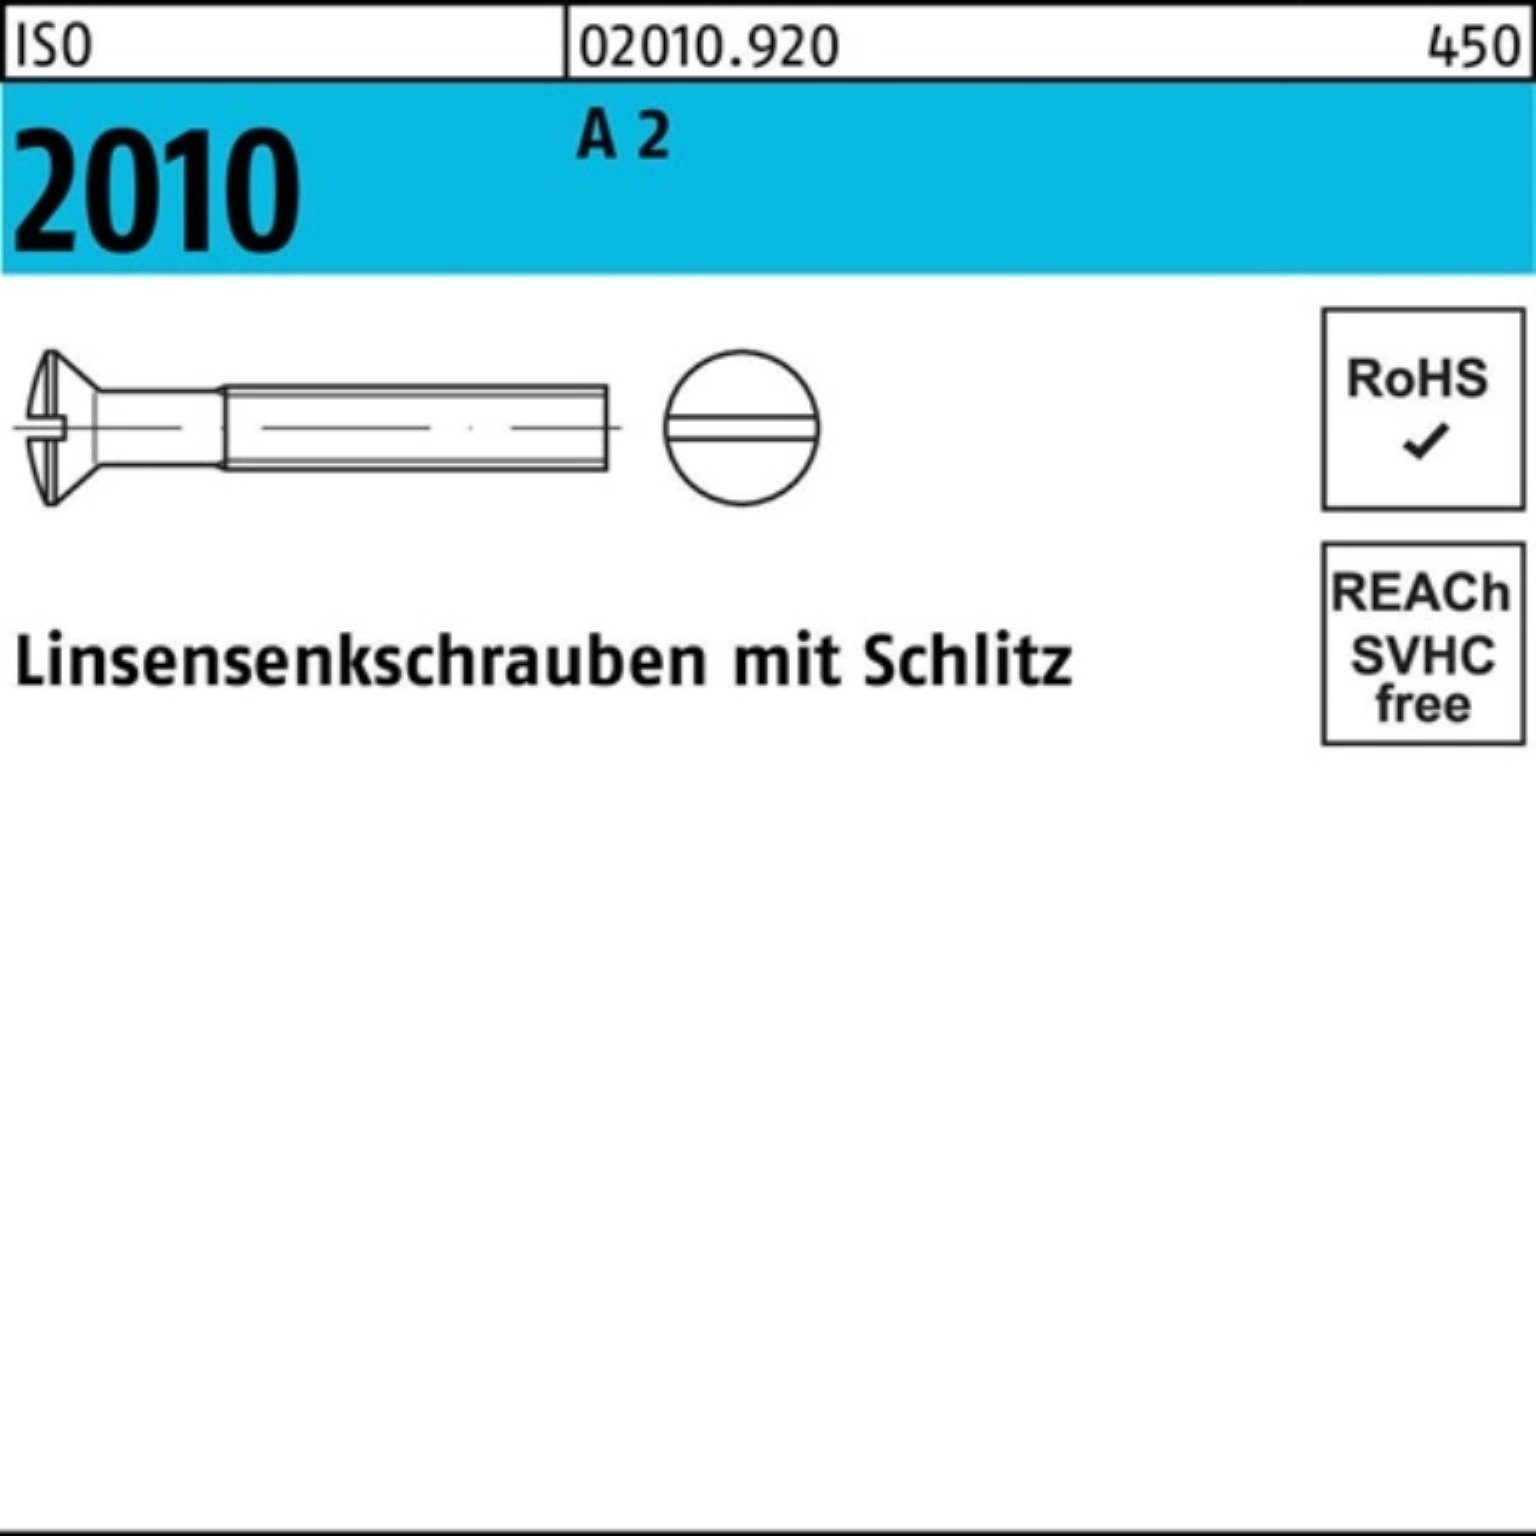 Reyher Linsenschraube 100er 2010 2 Linsensenkschraube Schlitz Stück M10x A 100 Pack 35 ISO